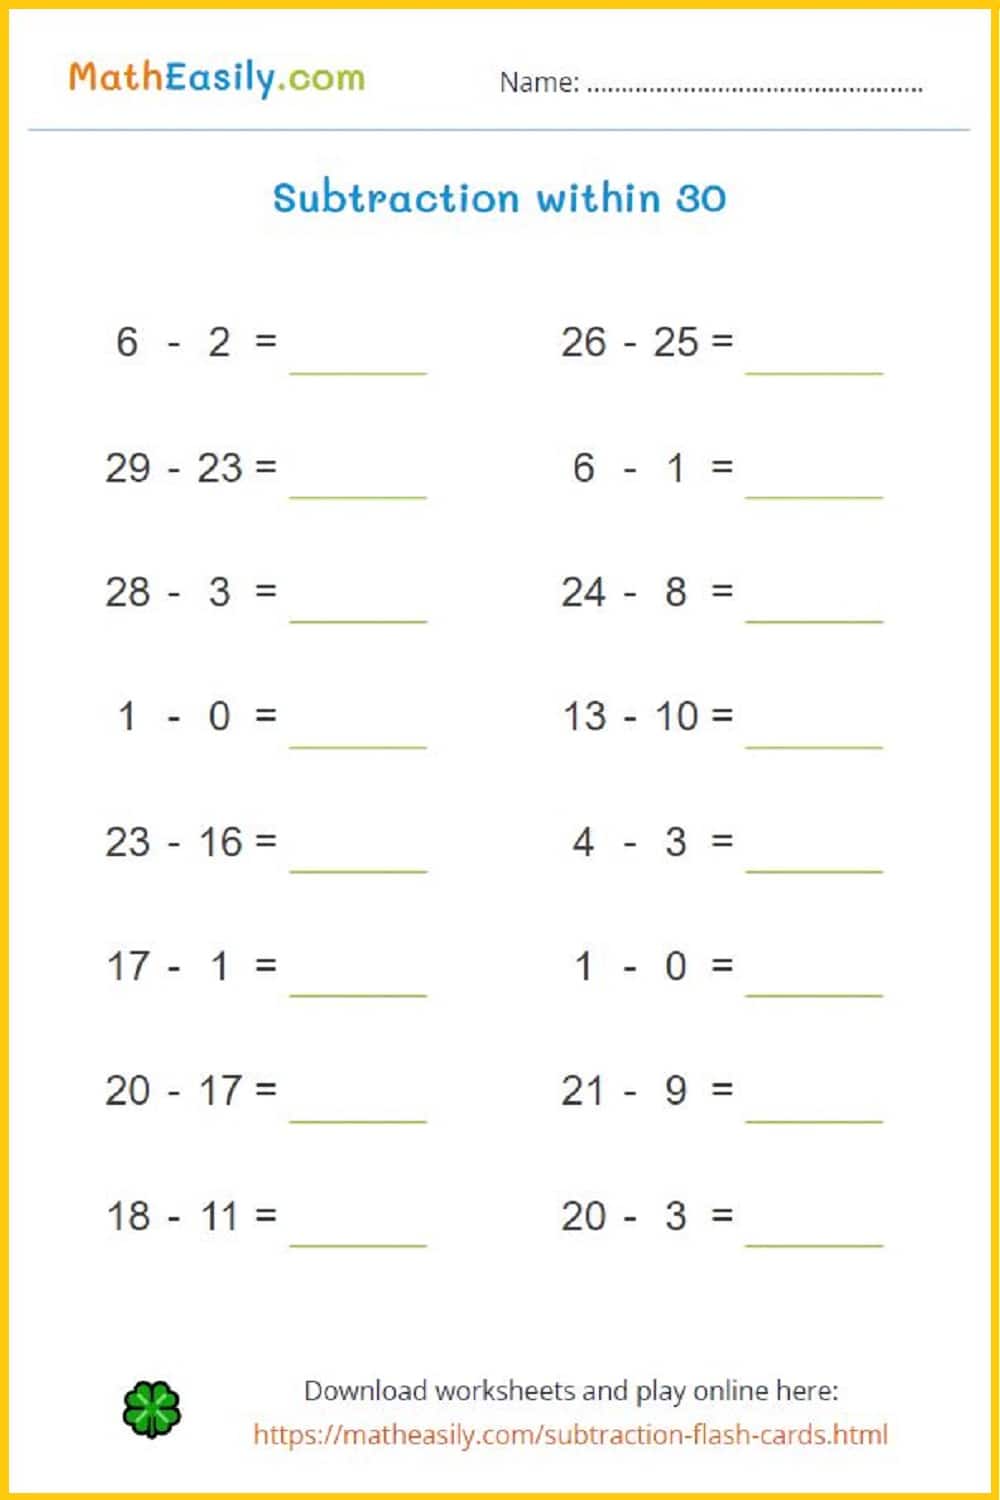 first grade subtraction worksheets:
1st grade math worksheets subtraction. Free worksheets grade 1 math.